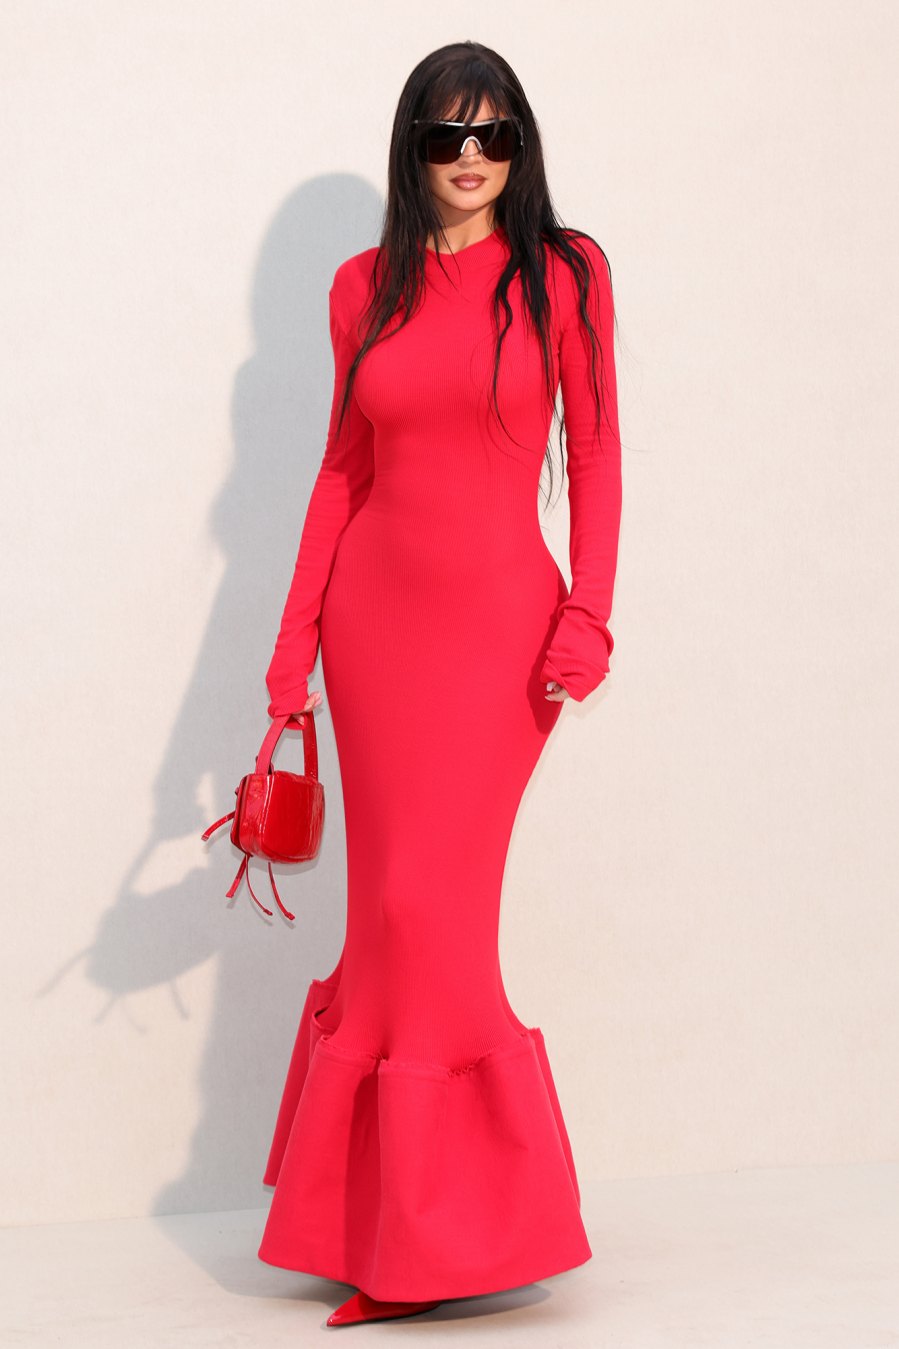 Kylie Jenner Red Dress Large Black Sunglasses at Acne Studios Paris Fashion Week 2023